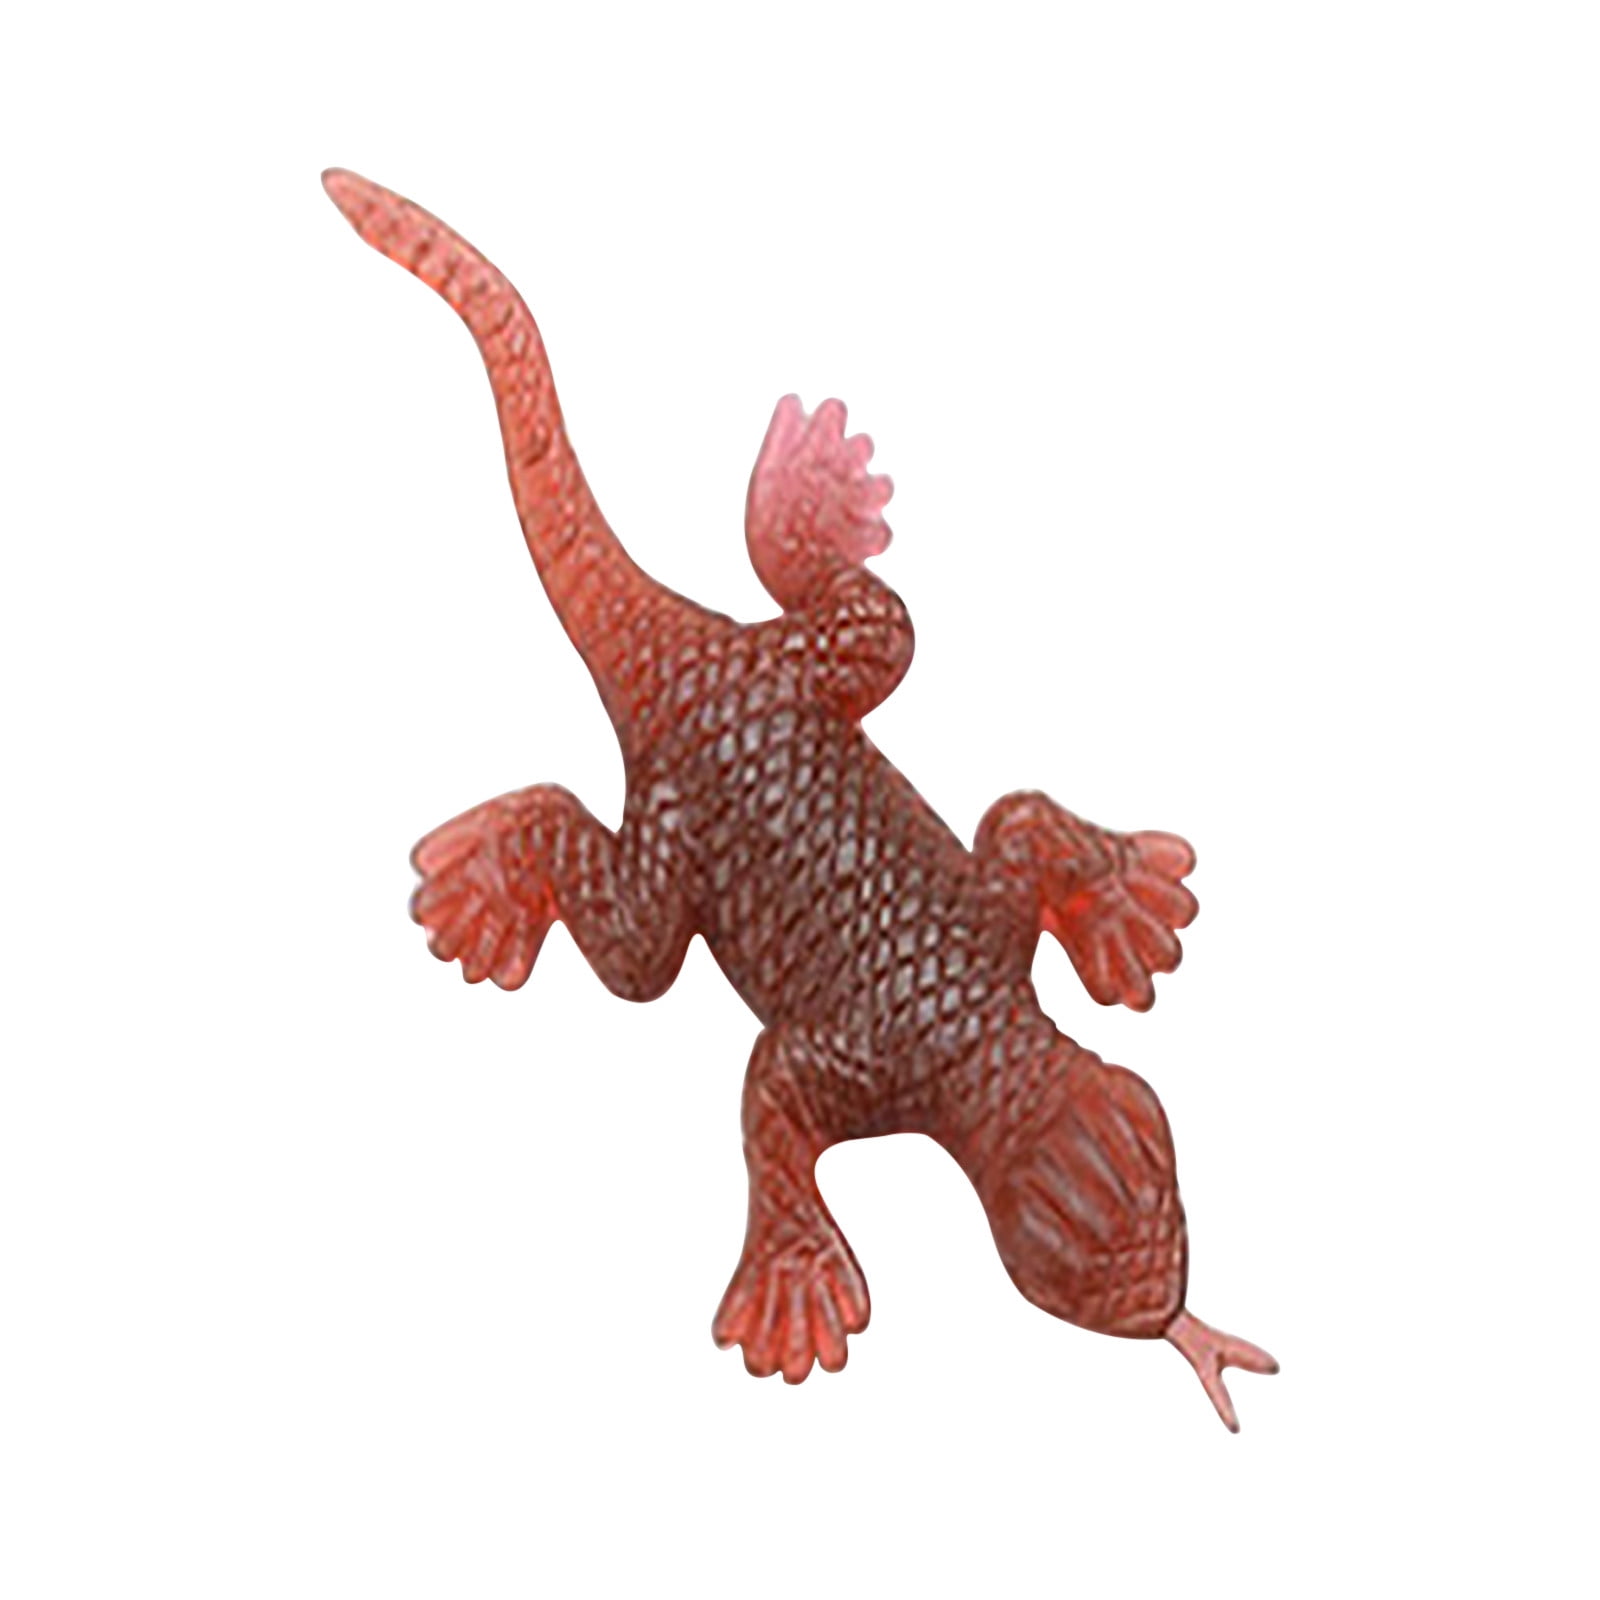 12pcs/set Simulation Animal Tortoise Figures Model Toys Trick Jokes Kids Gift 